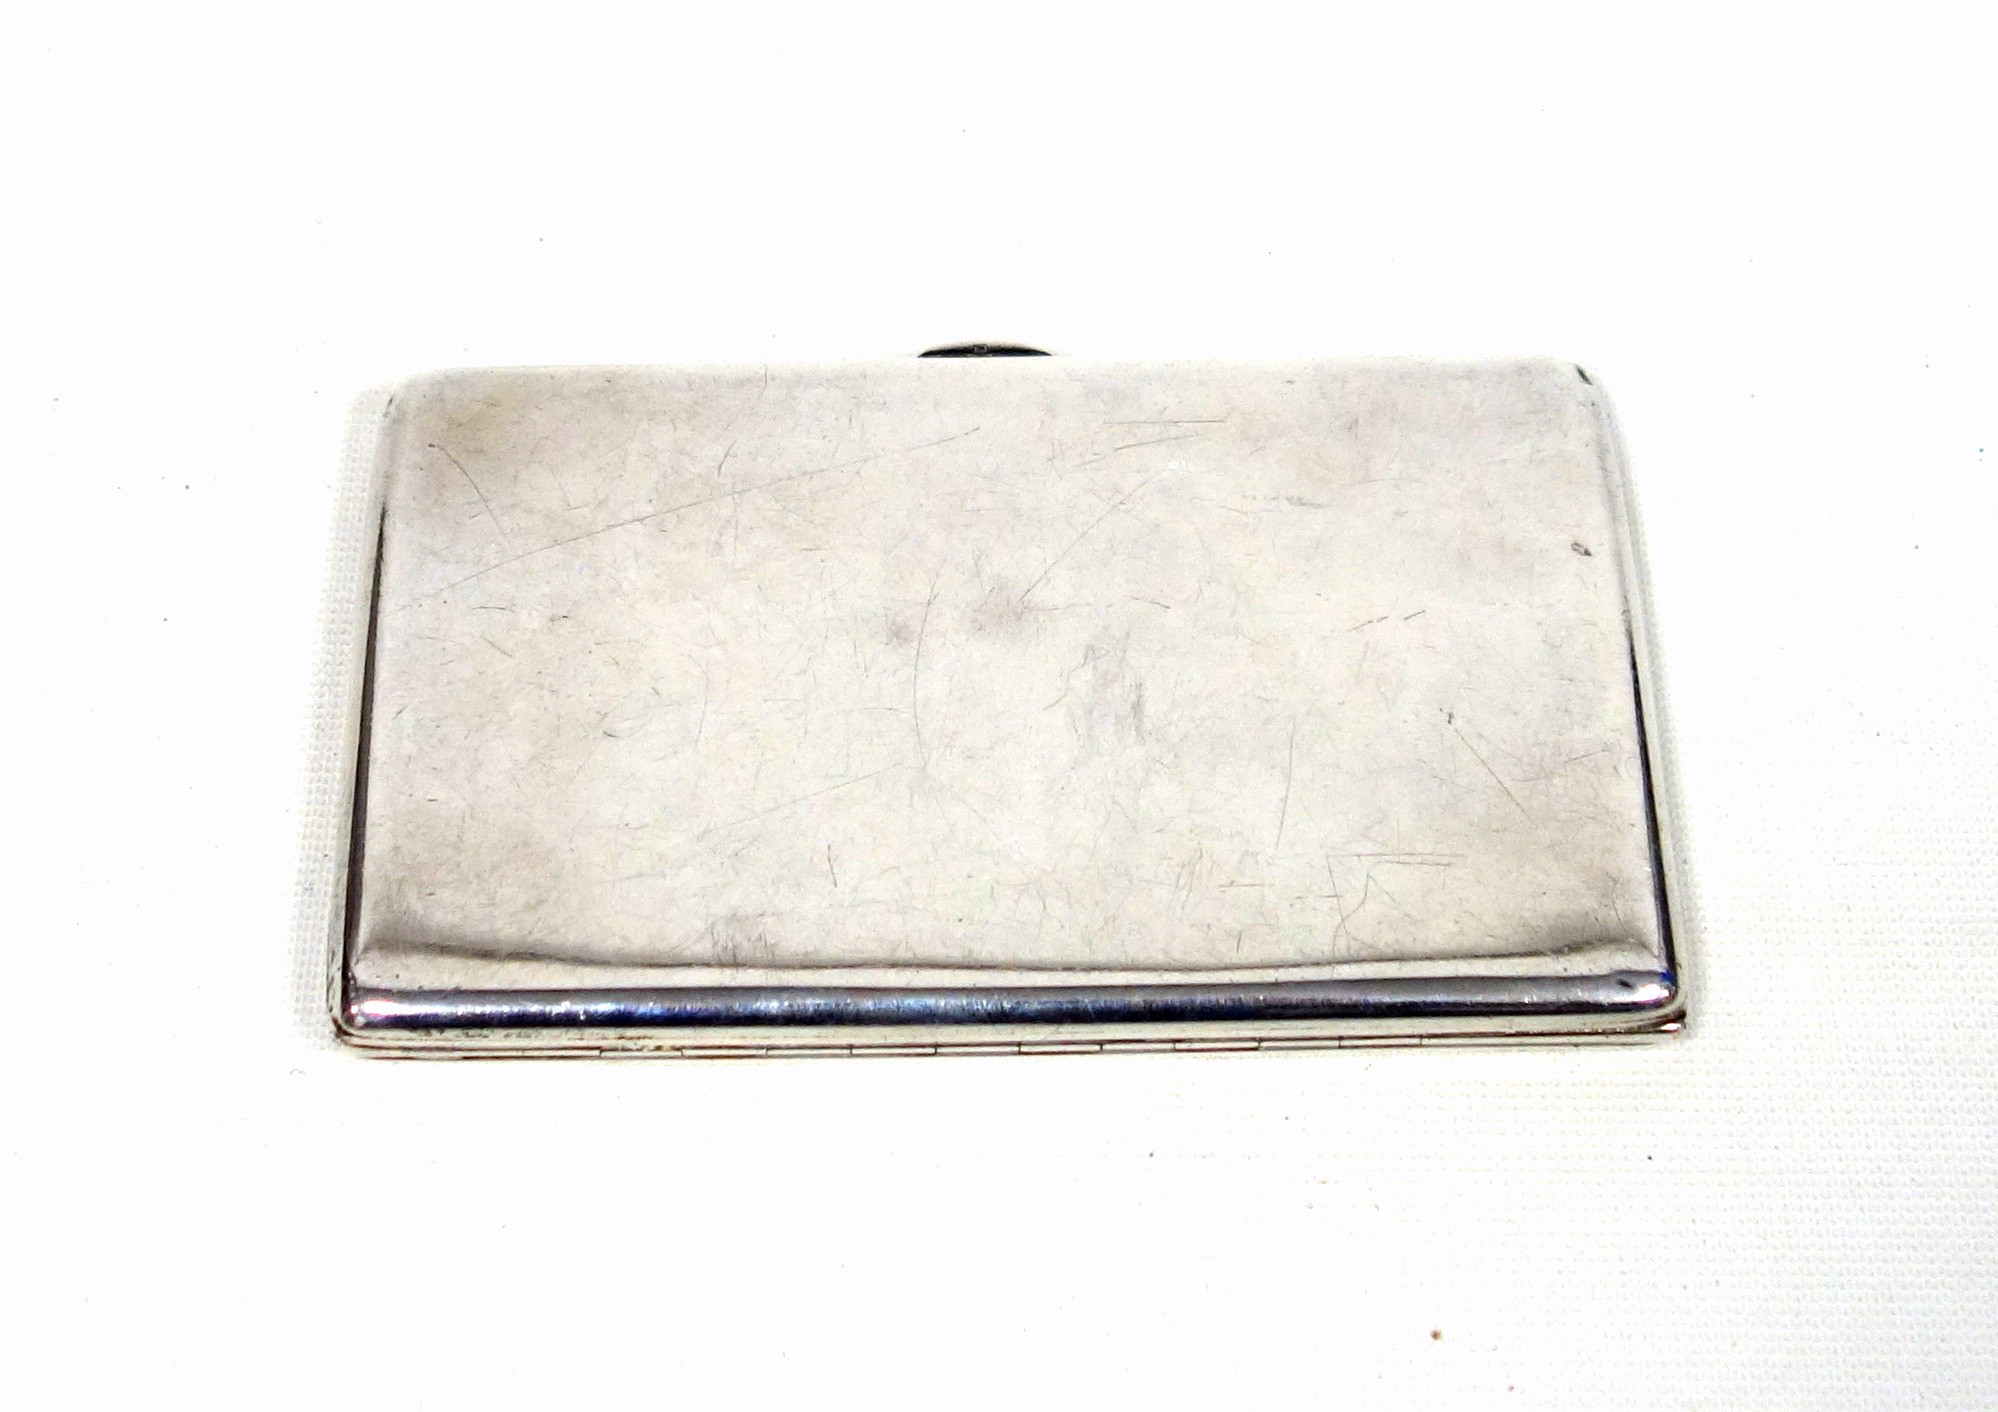 George V silver rectangular cigarette case with a gilt interior and presentation inscription "S. - Image 2 of 5